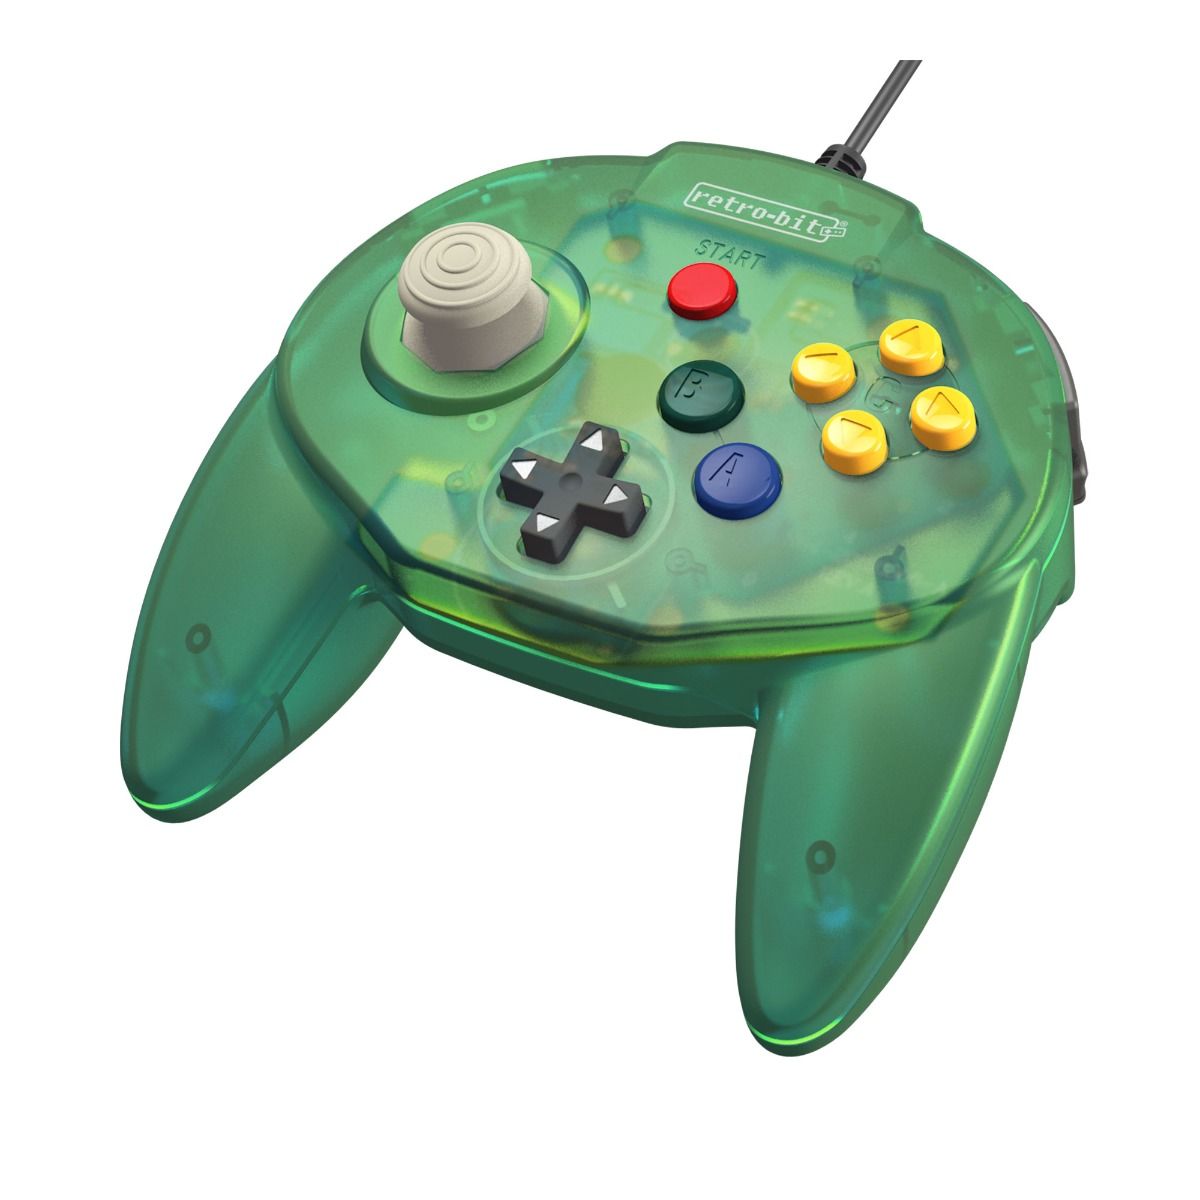 Retro-Bit Tribute 64 Nintendo 64 controller clear green Gamesellers.nl